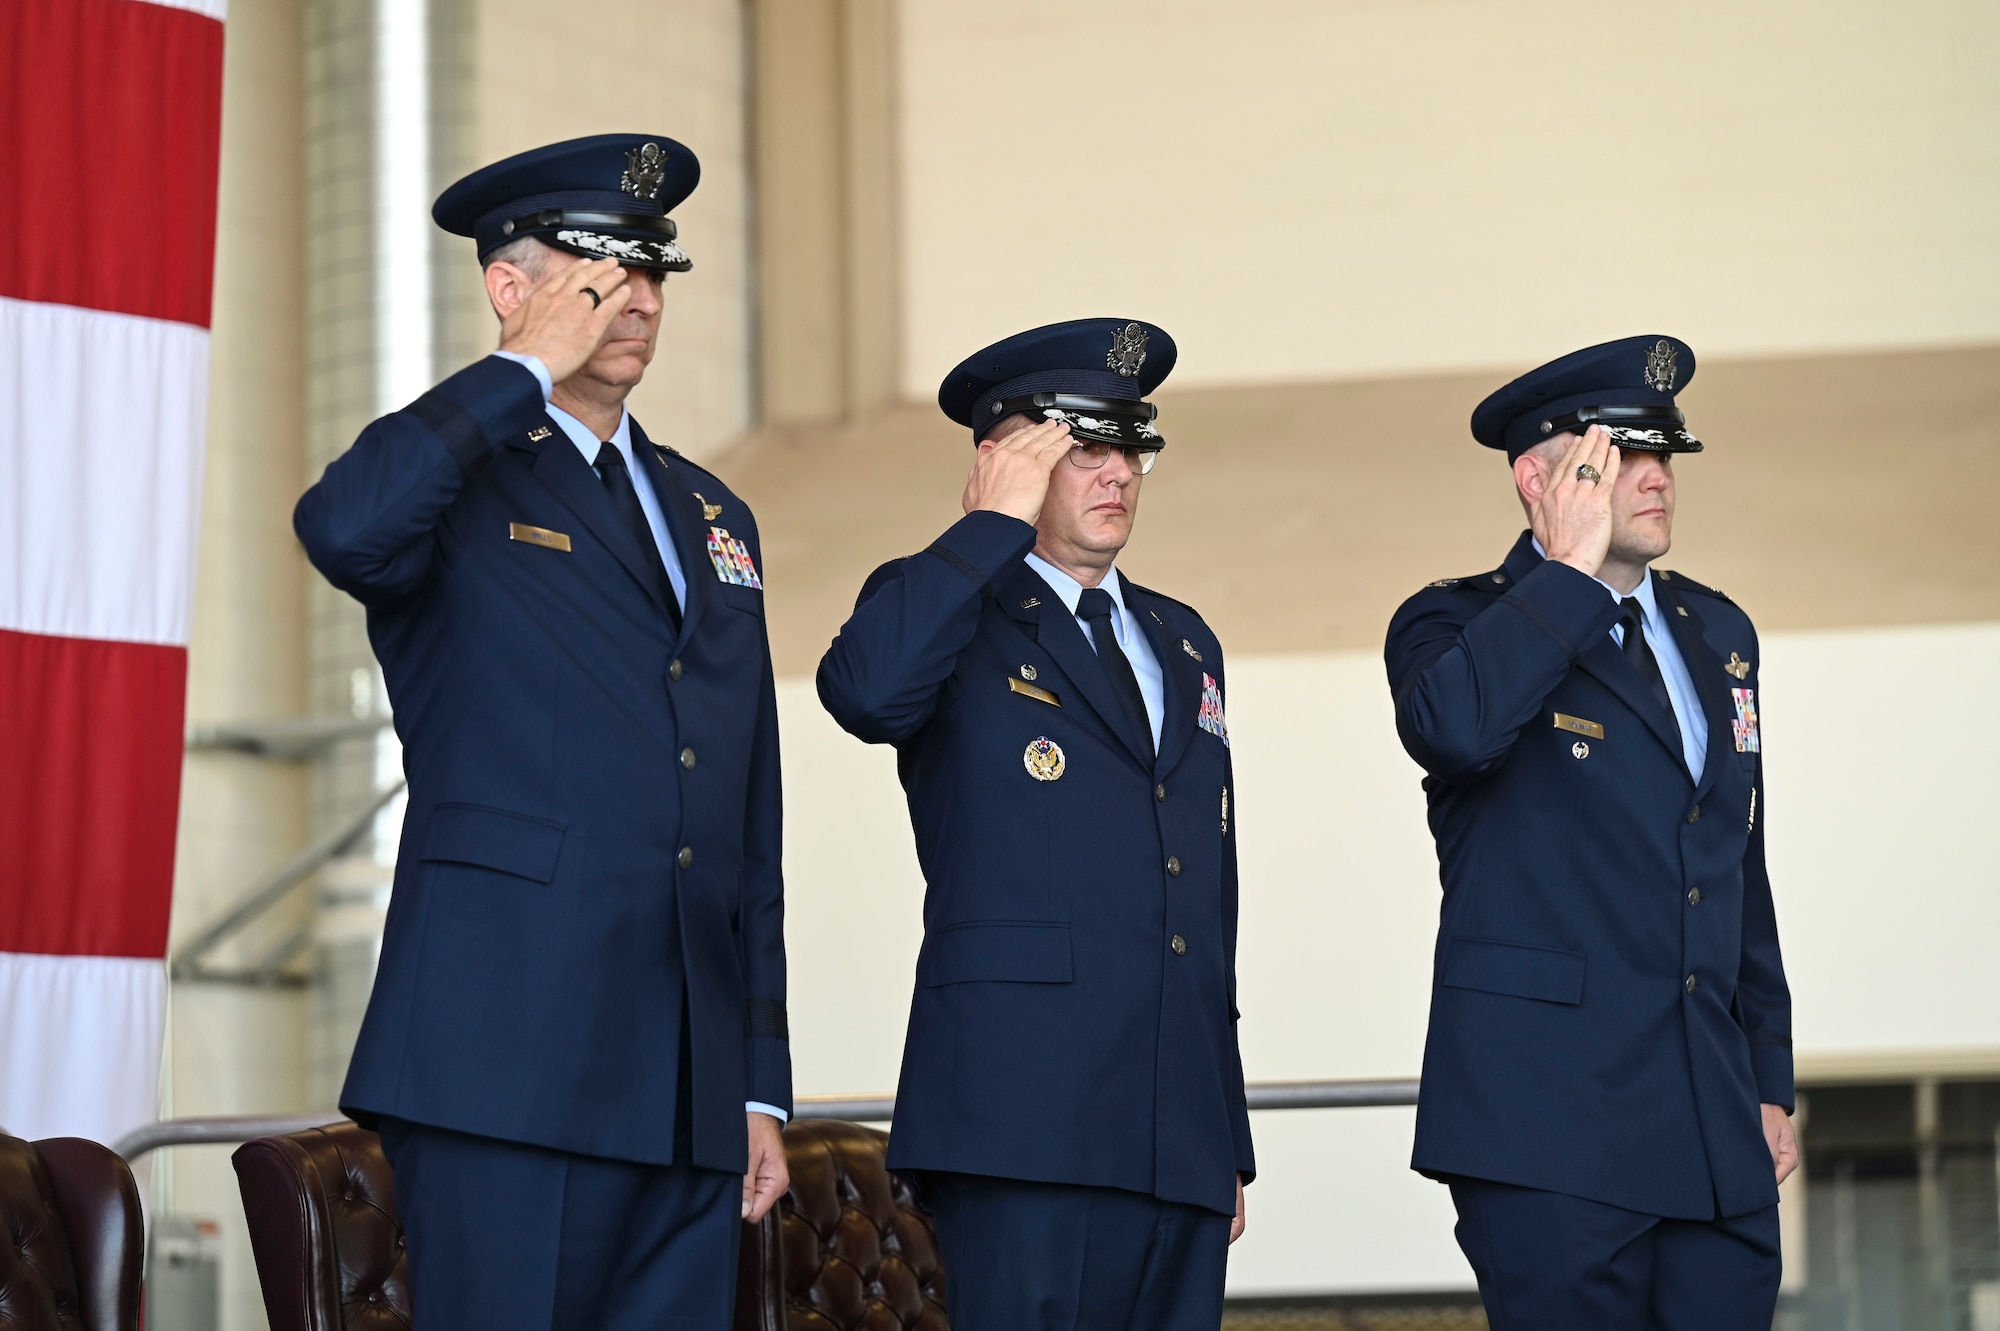 Officers render salutes